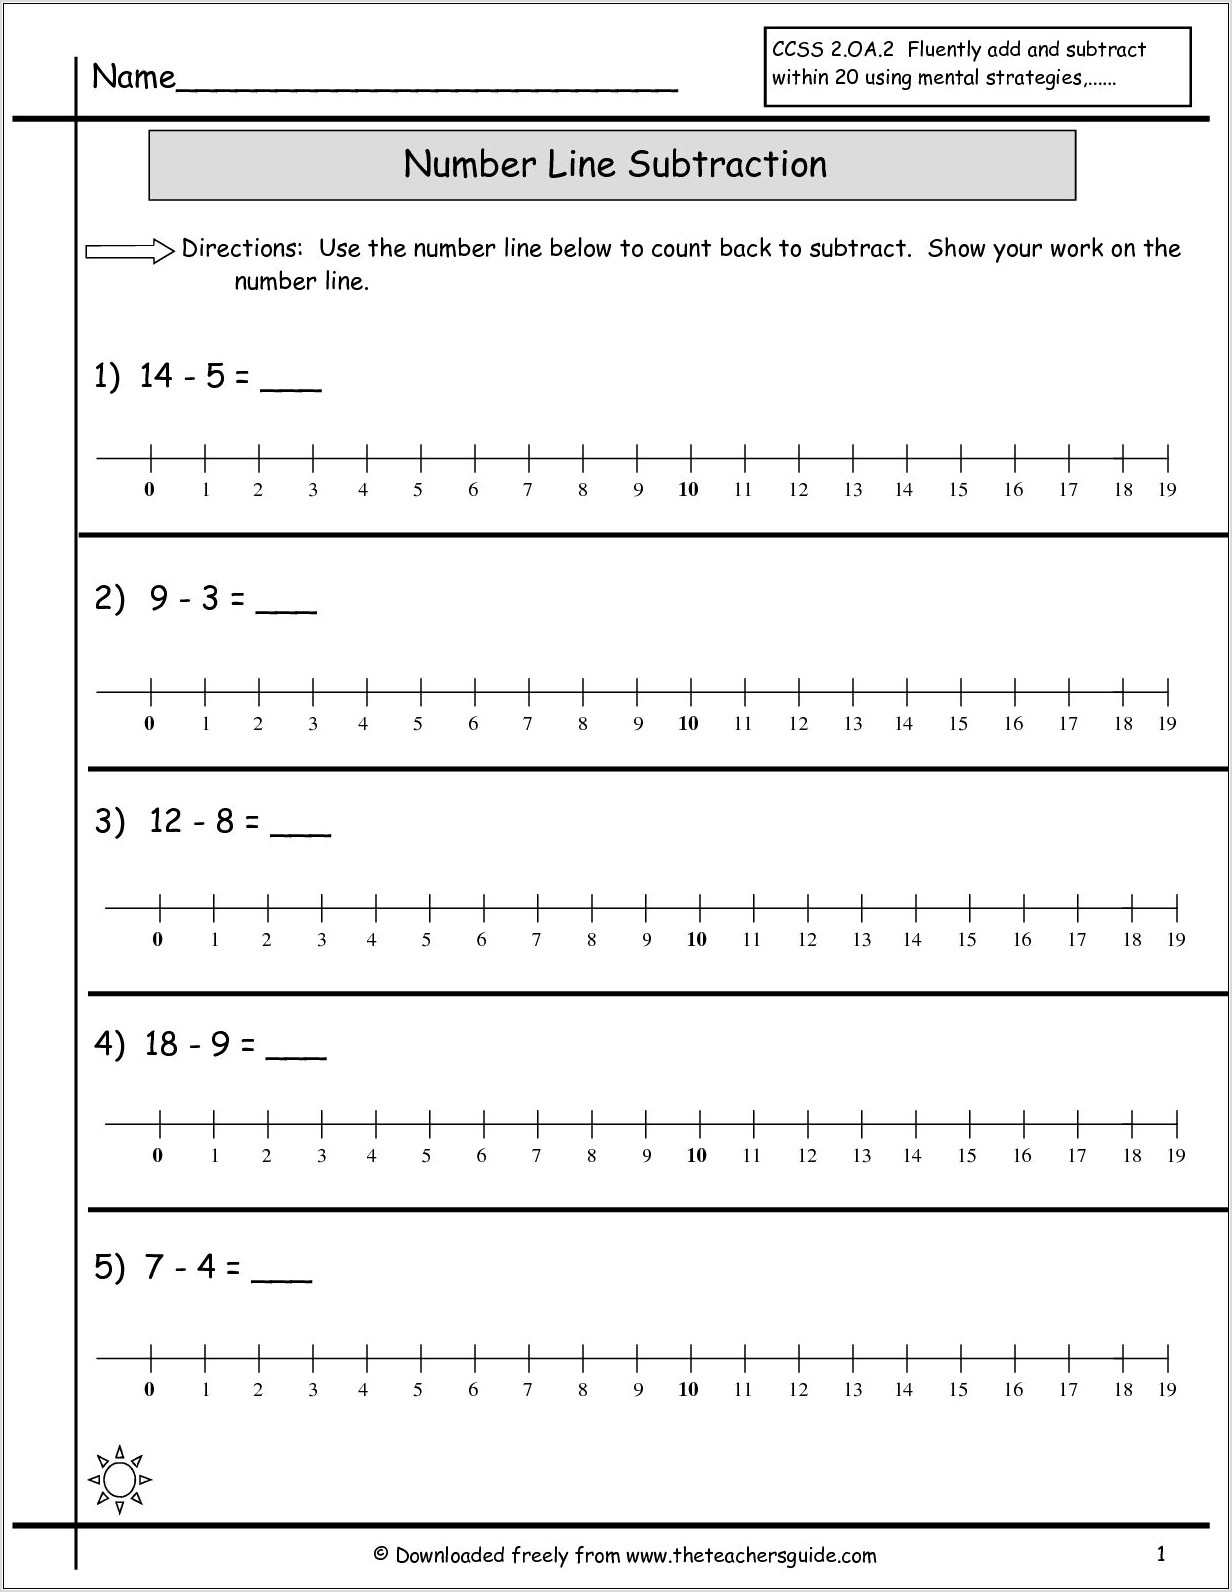 Worksheet About Number Line